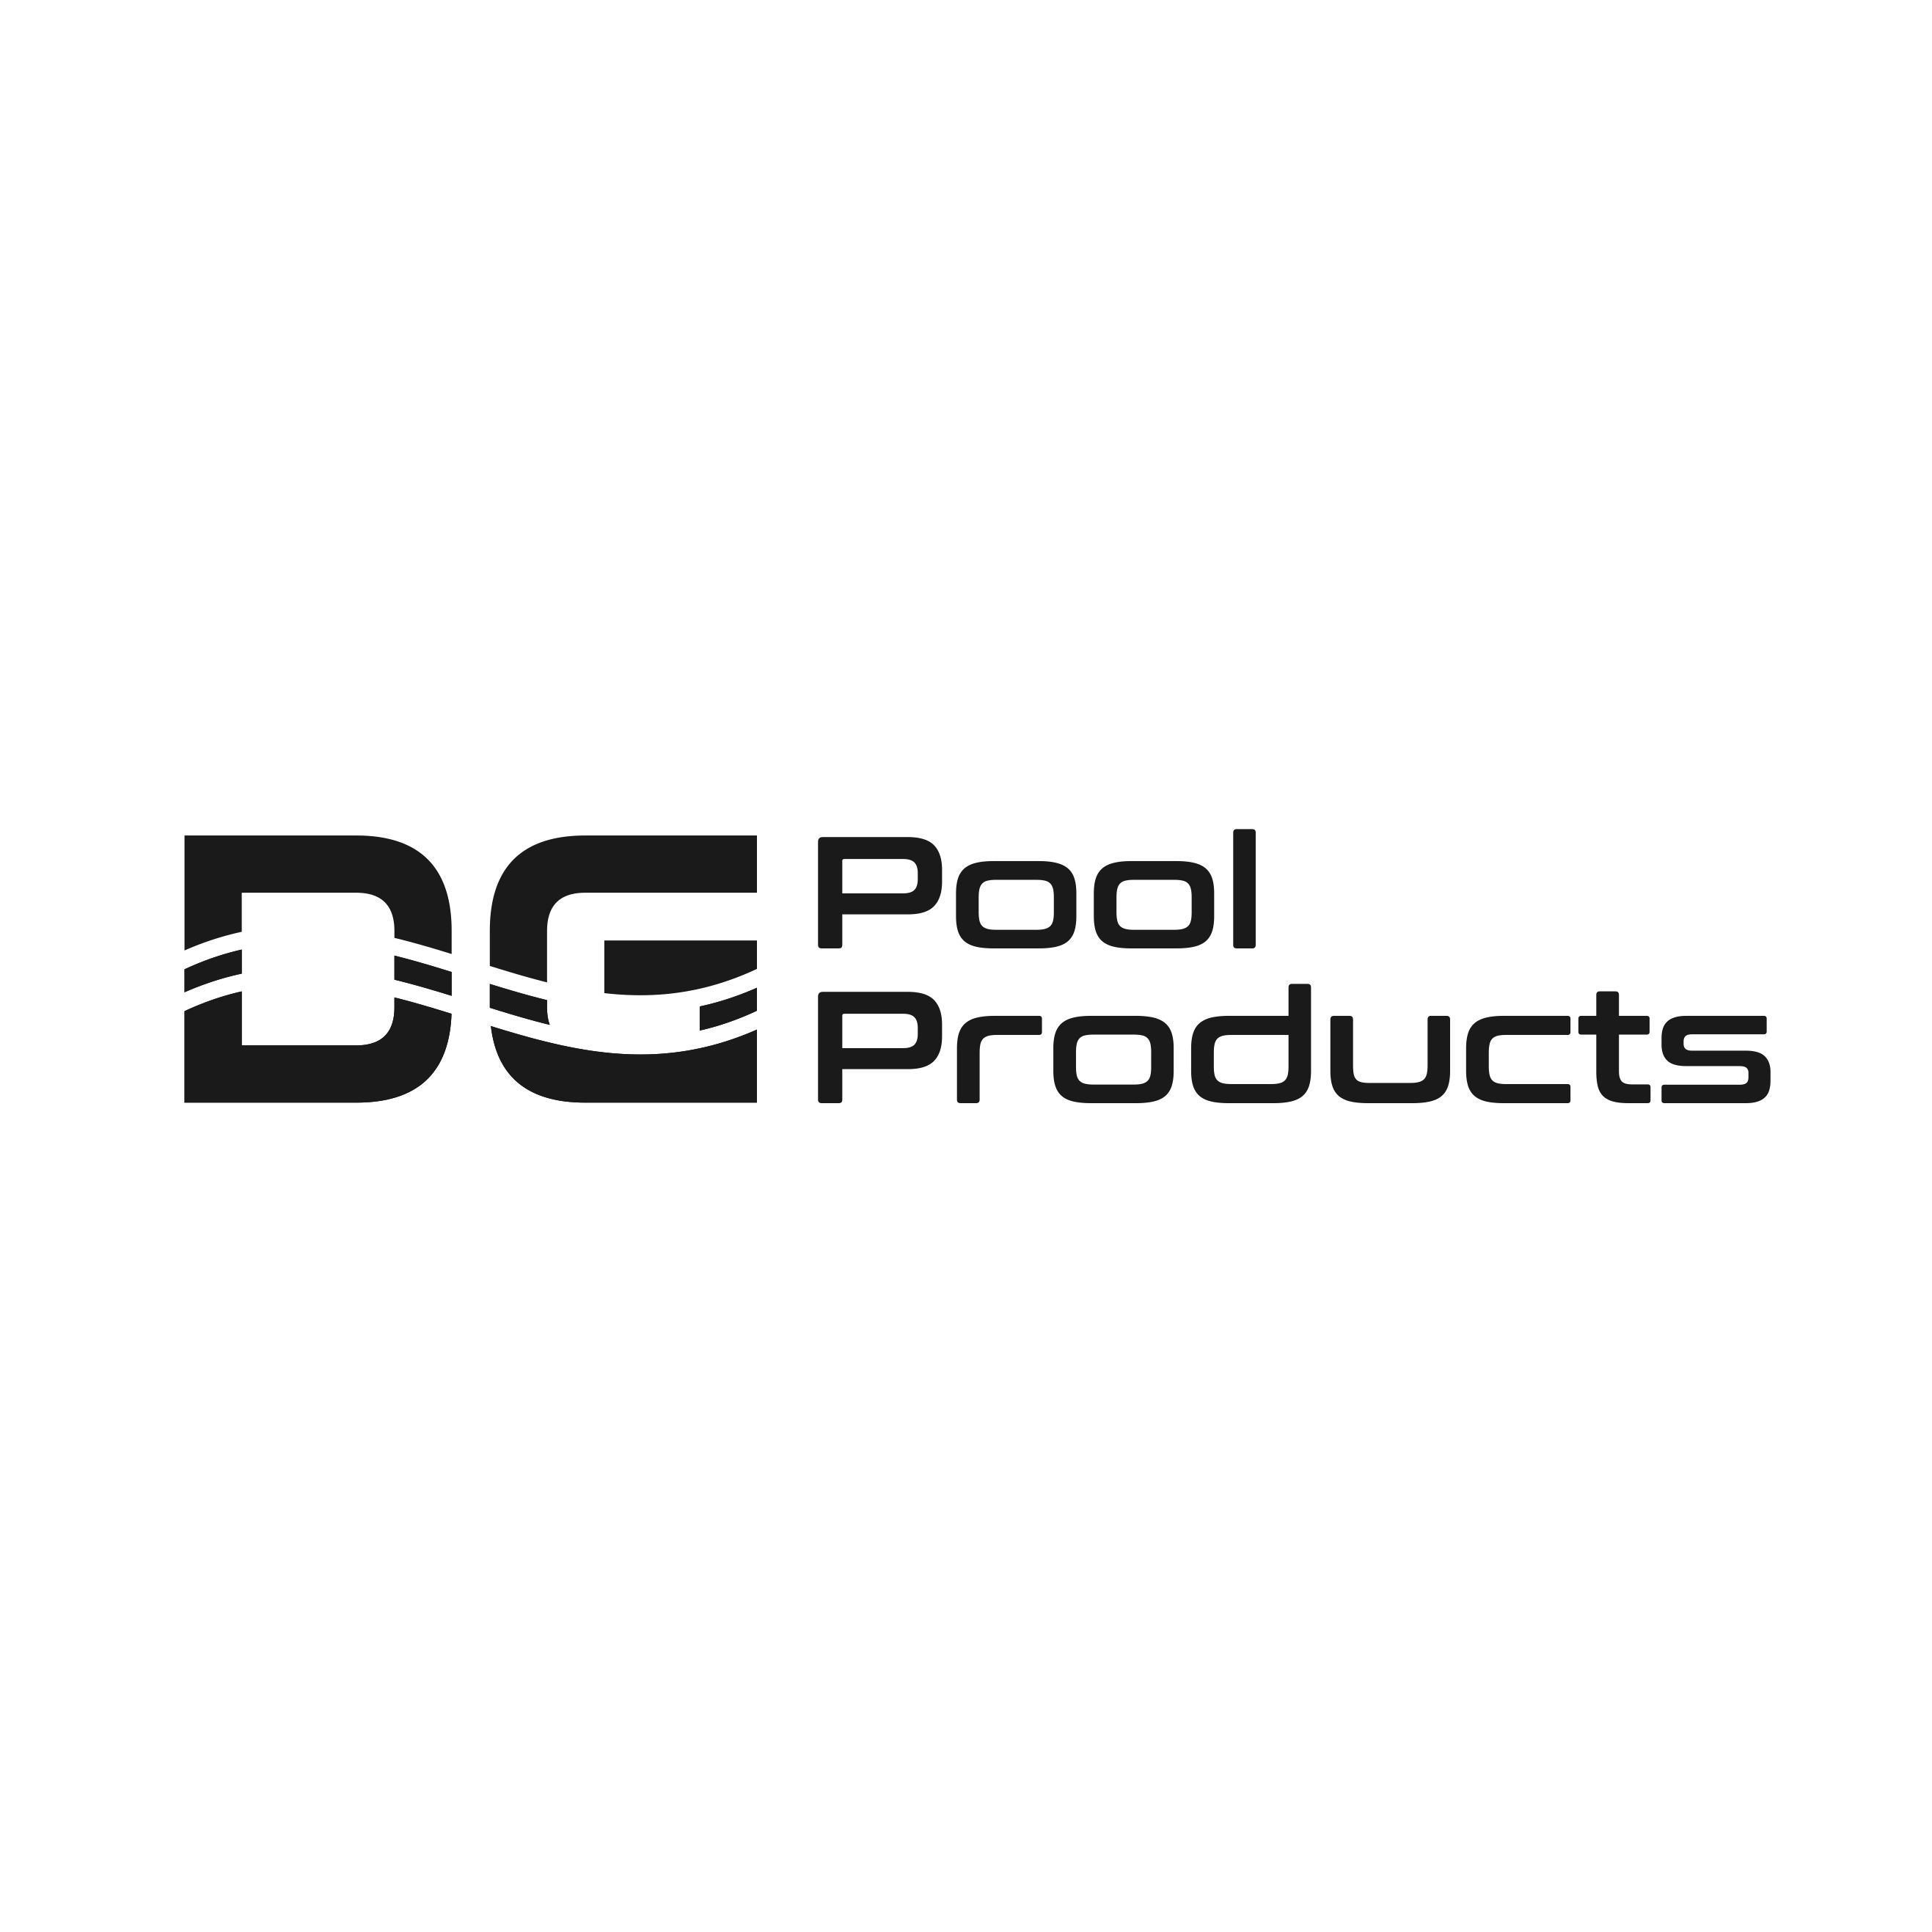 DG Pool Supply